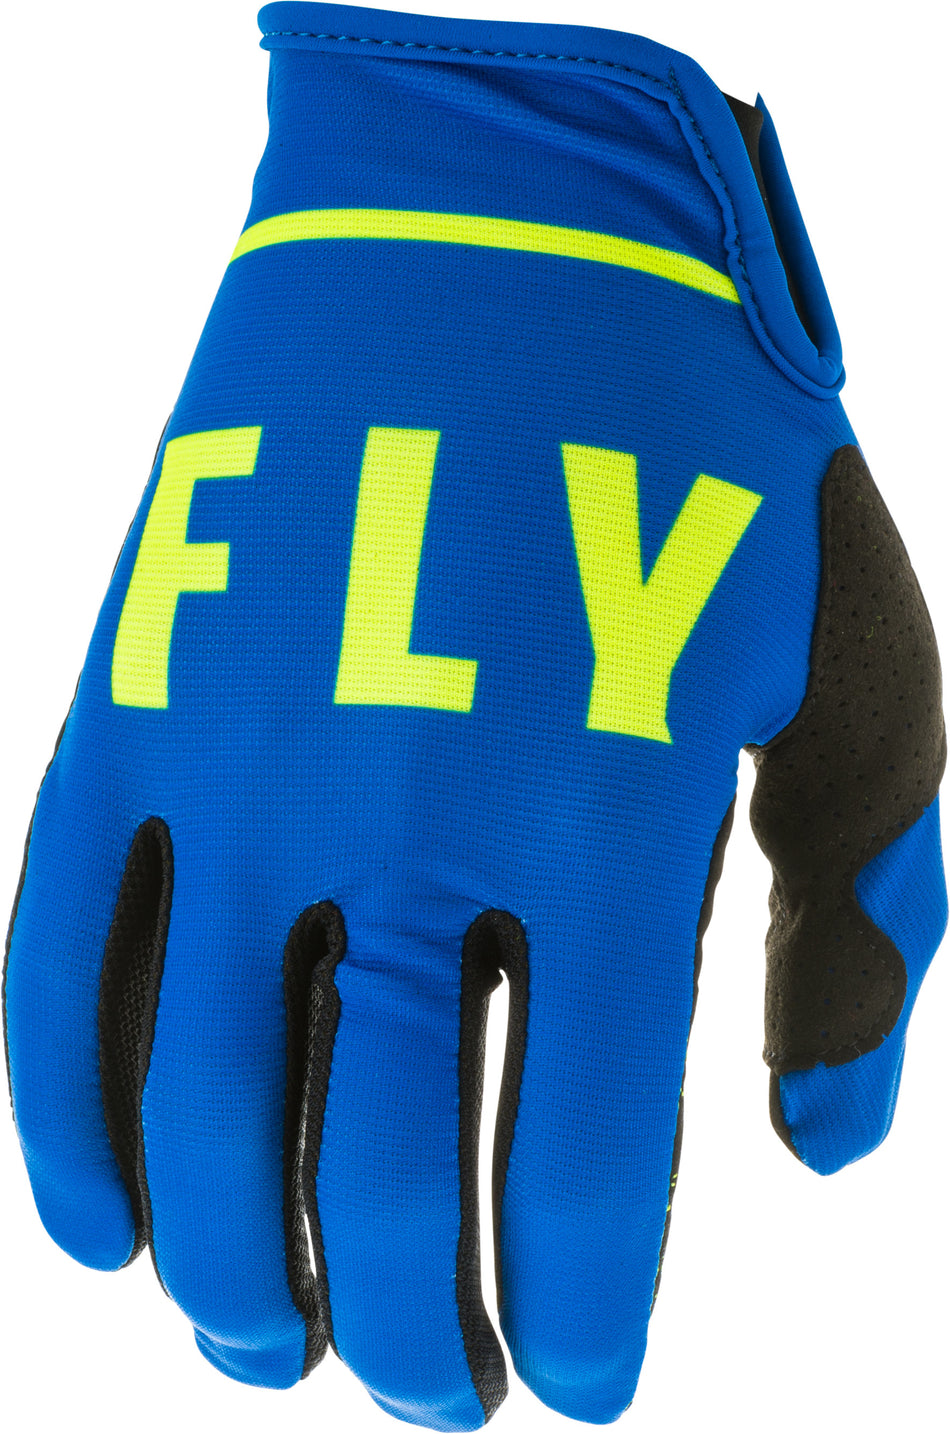 FLY RACING Lite Gloves Blue/Black/Hi-Vis Sz 11 373-71011